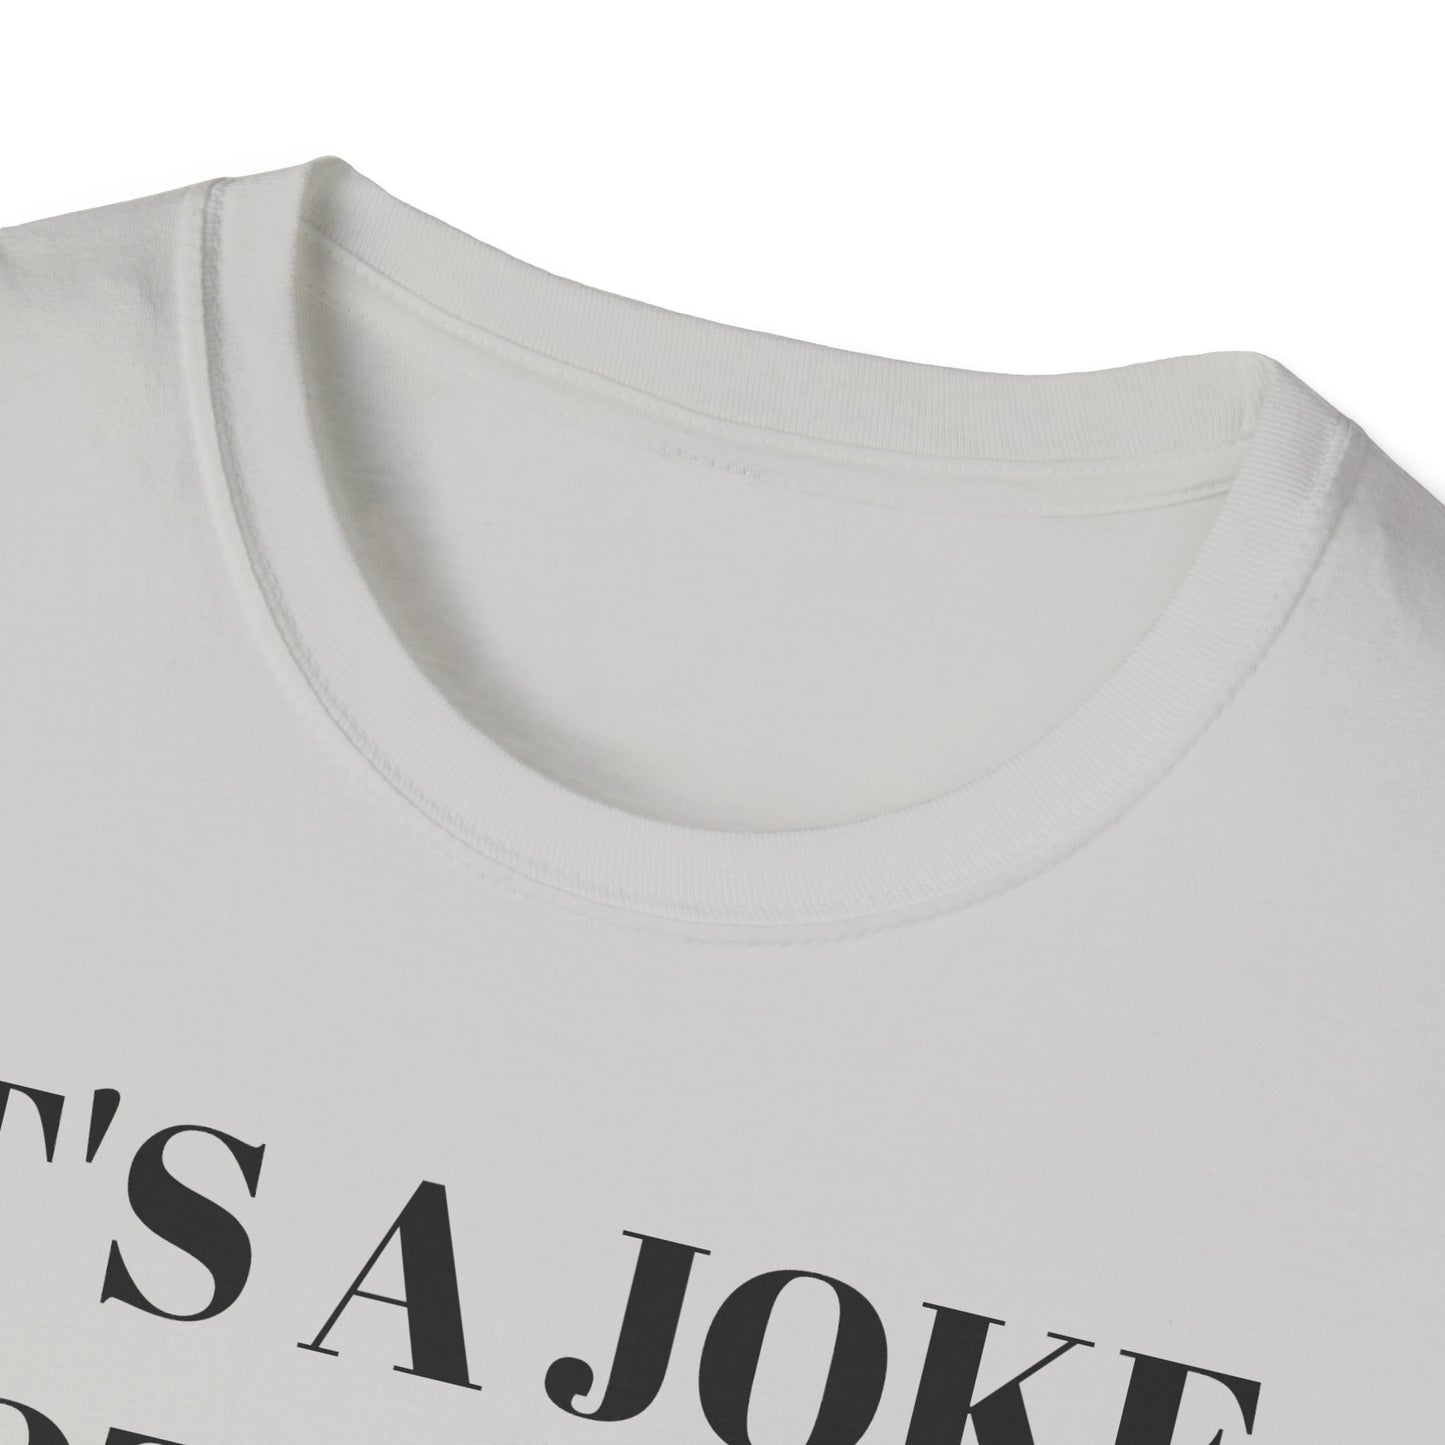 It's a Joke not a dick - Unisex Softstyle T-Shirt